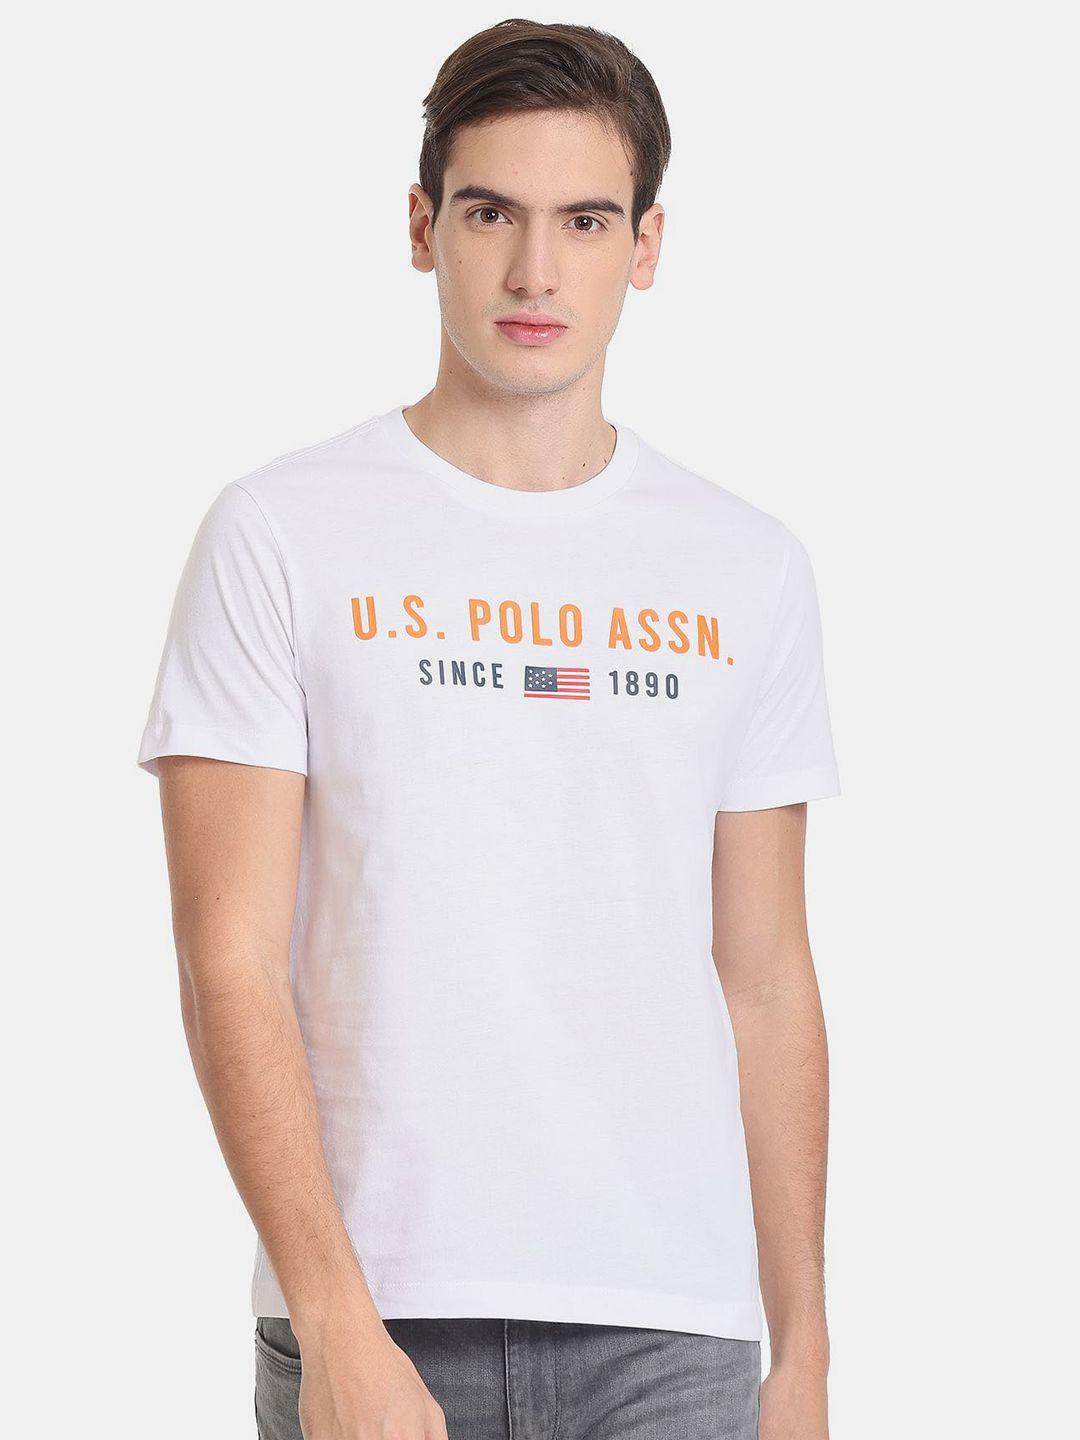 u.s.-polo-assn.-men-brand-logo-printed-slim-fit-pure-cotton-t-shirt